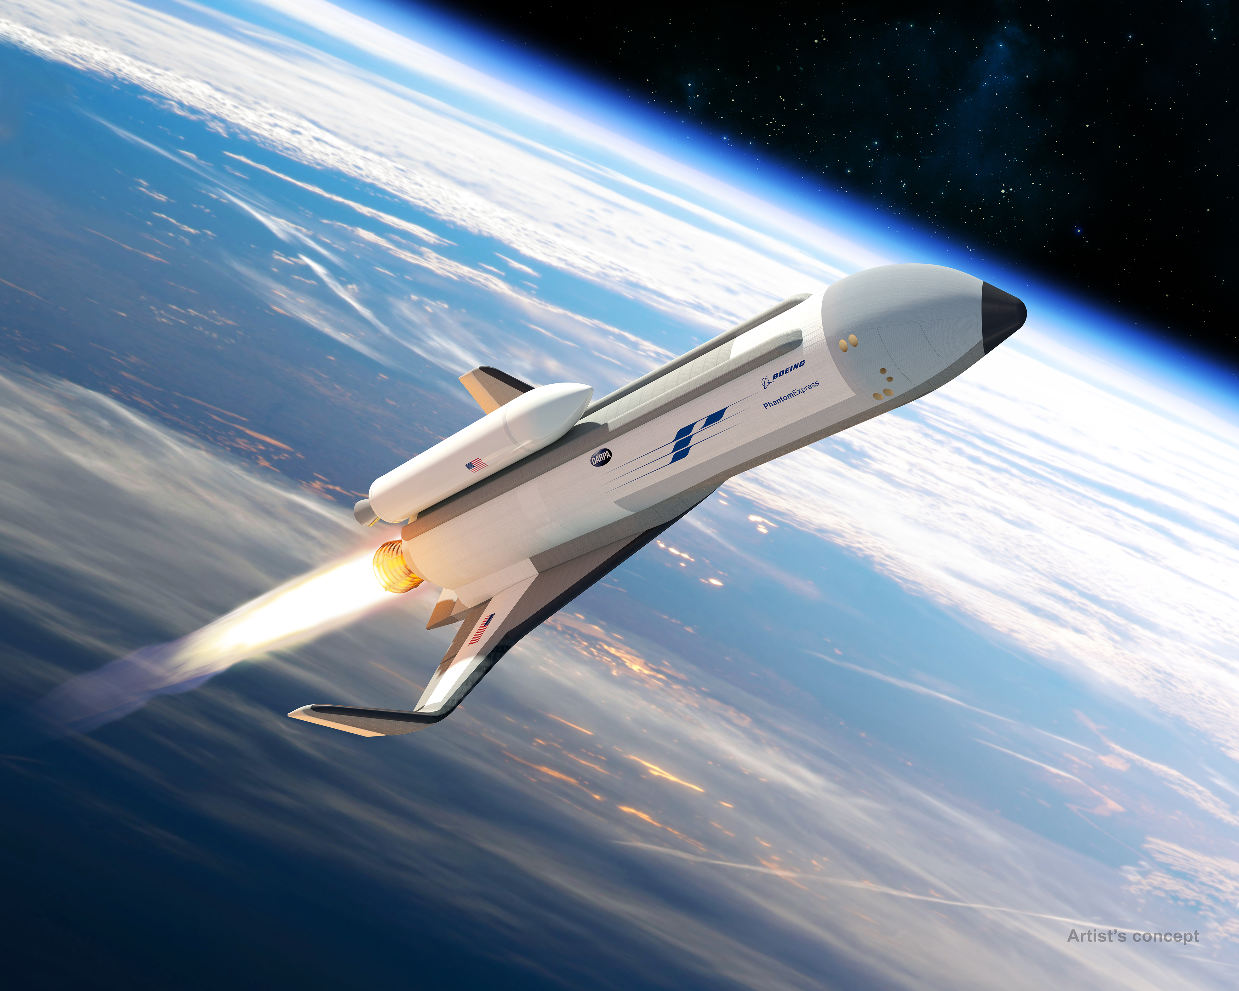 Boeing, DARPA to build experimental spaceplane